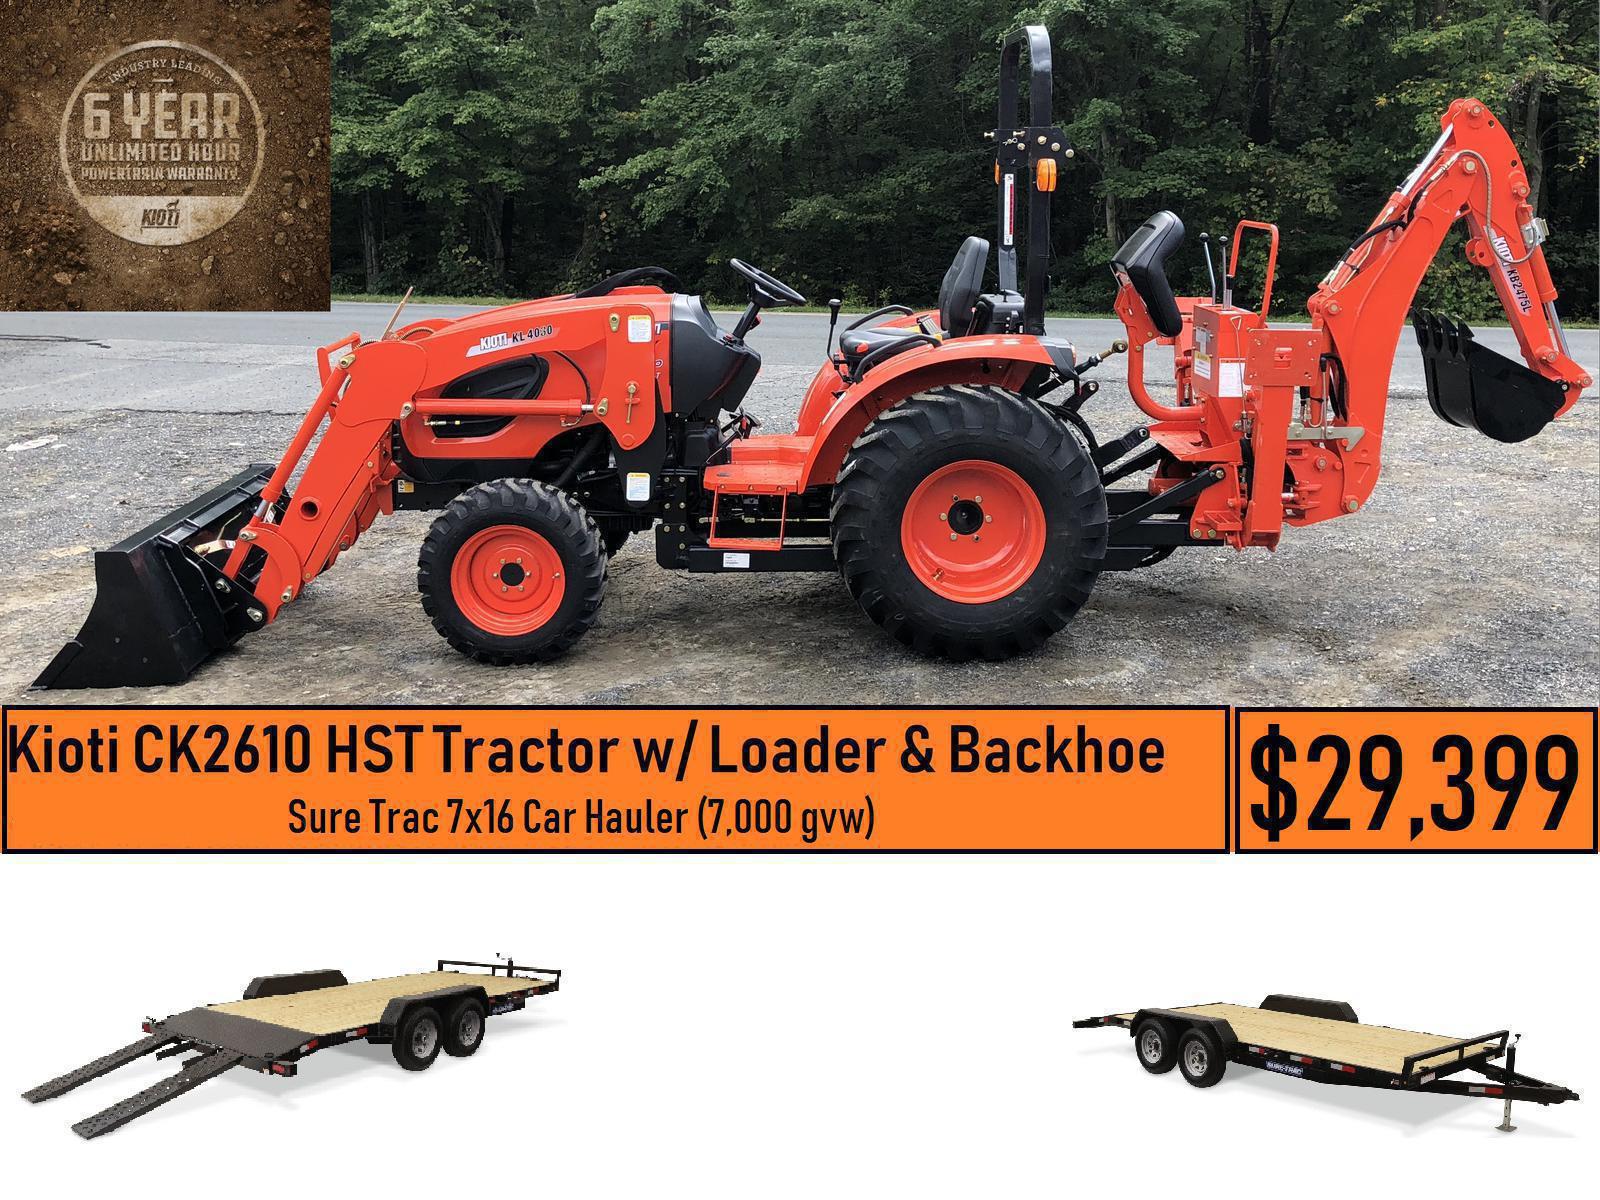 Kioti Package Deal Ck2610 Hst Tractor W Loader Backhoe